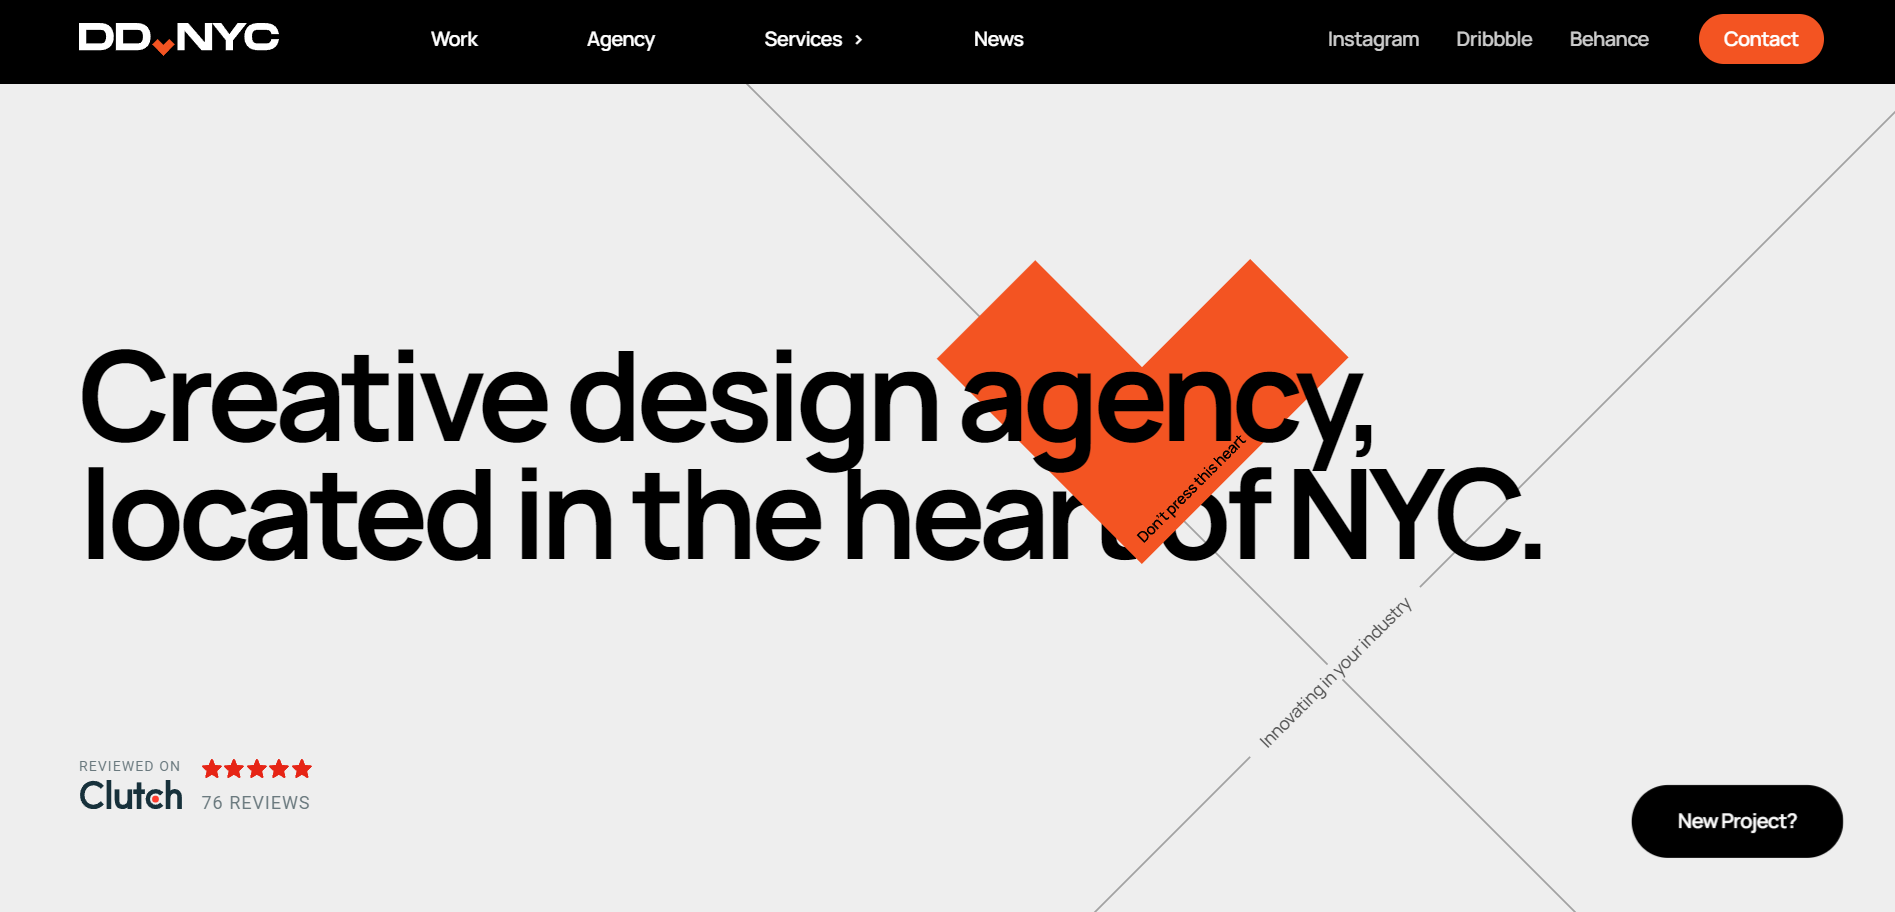 DigitalDesign.NYC